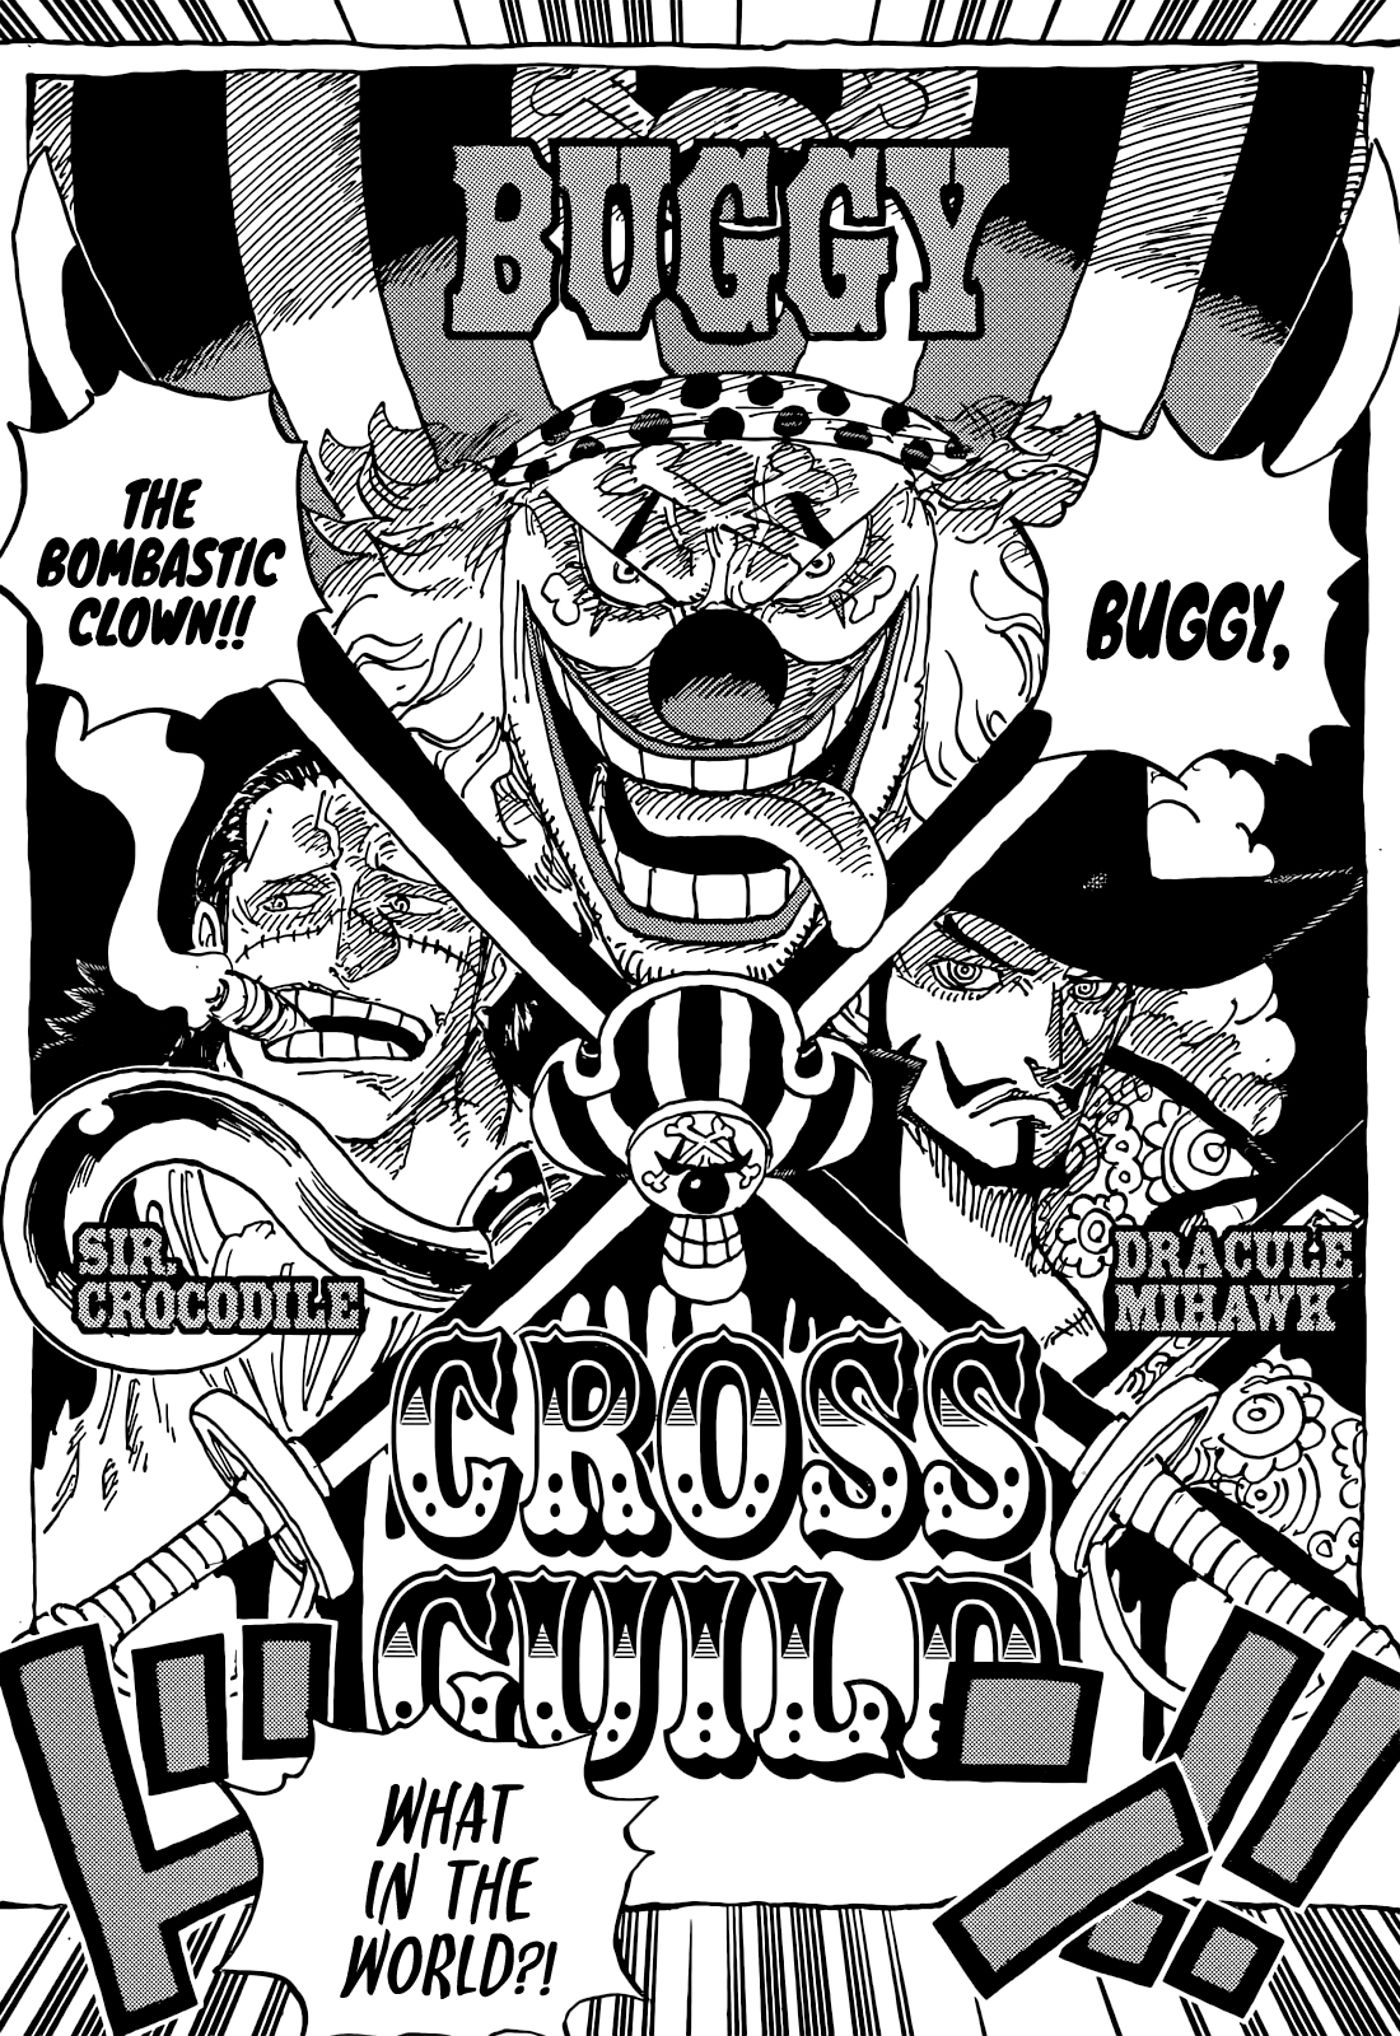 One-Piece-Buggy-Cross-Guild-Mihawk-Crocodile